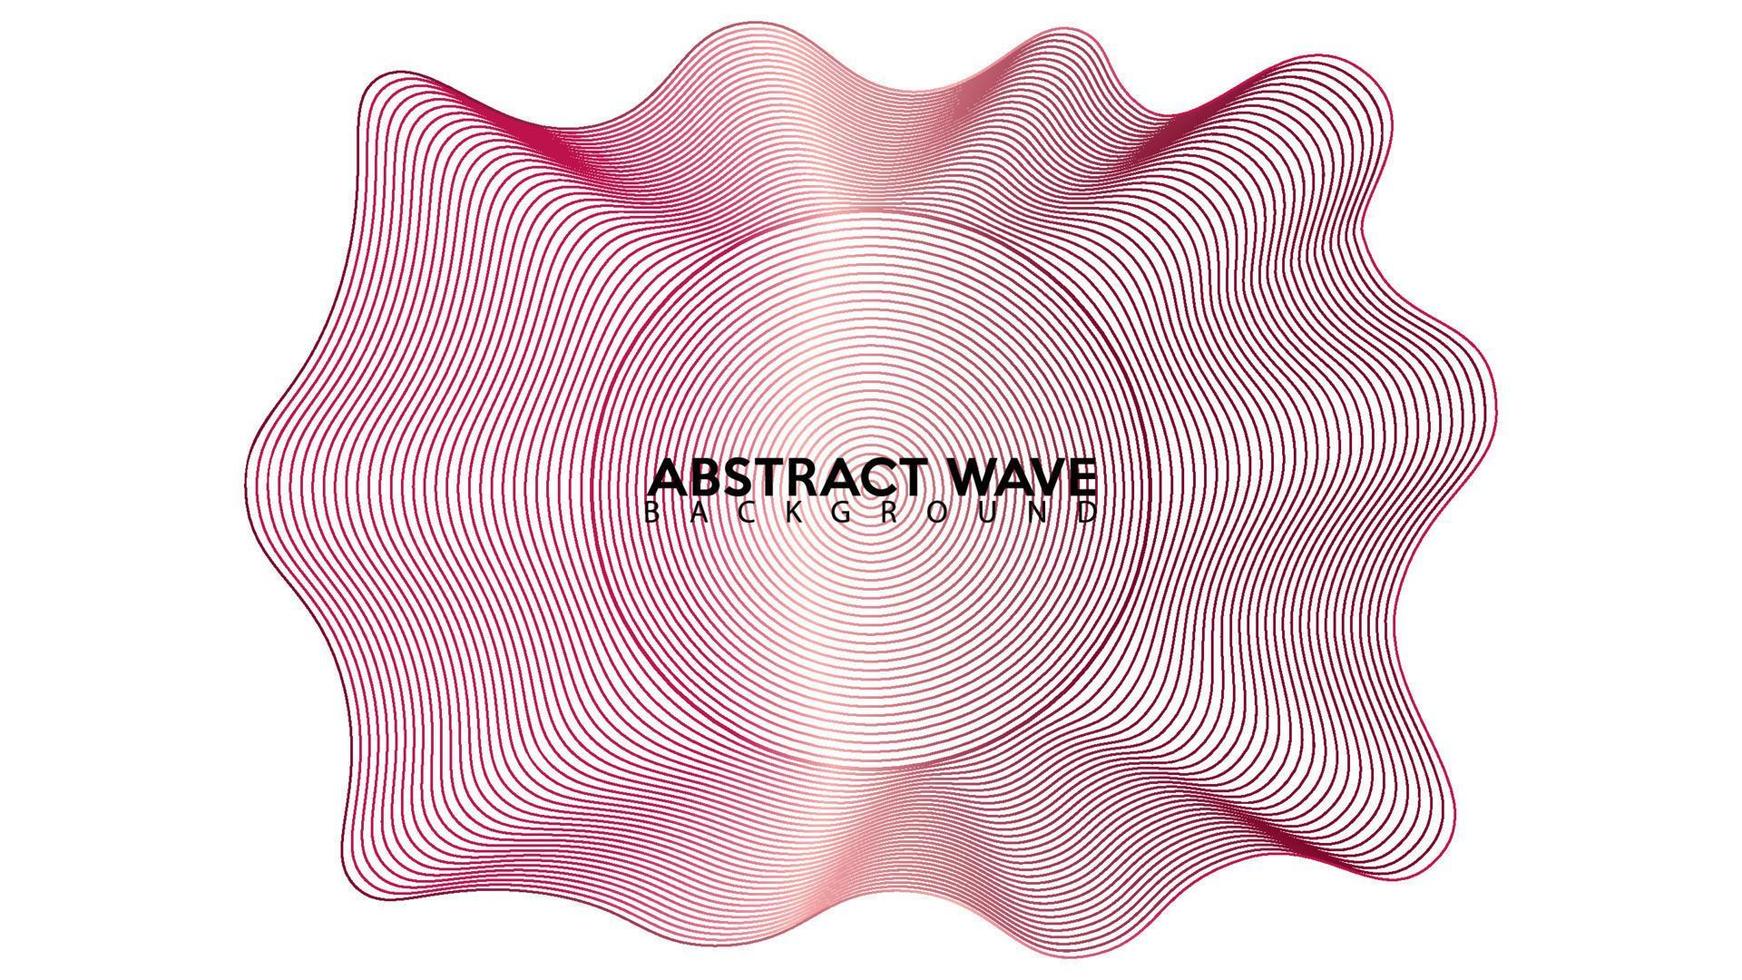 Spectrum Audio Wave Design Vector, Abstract Wave Line Background Design Template, Ellipse, Shiny Maroon, Brown vector